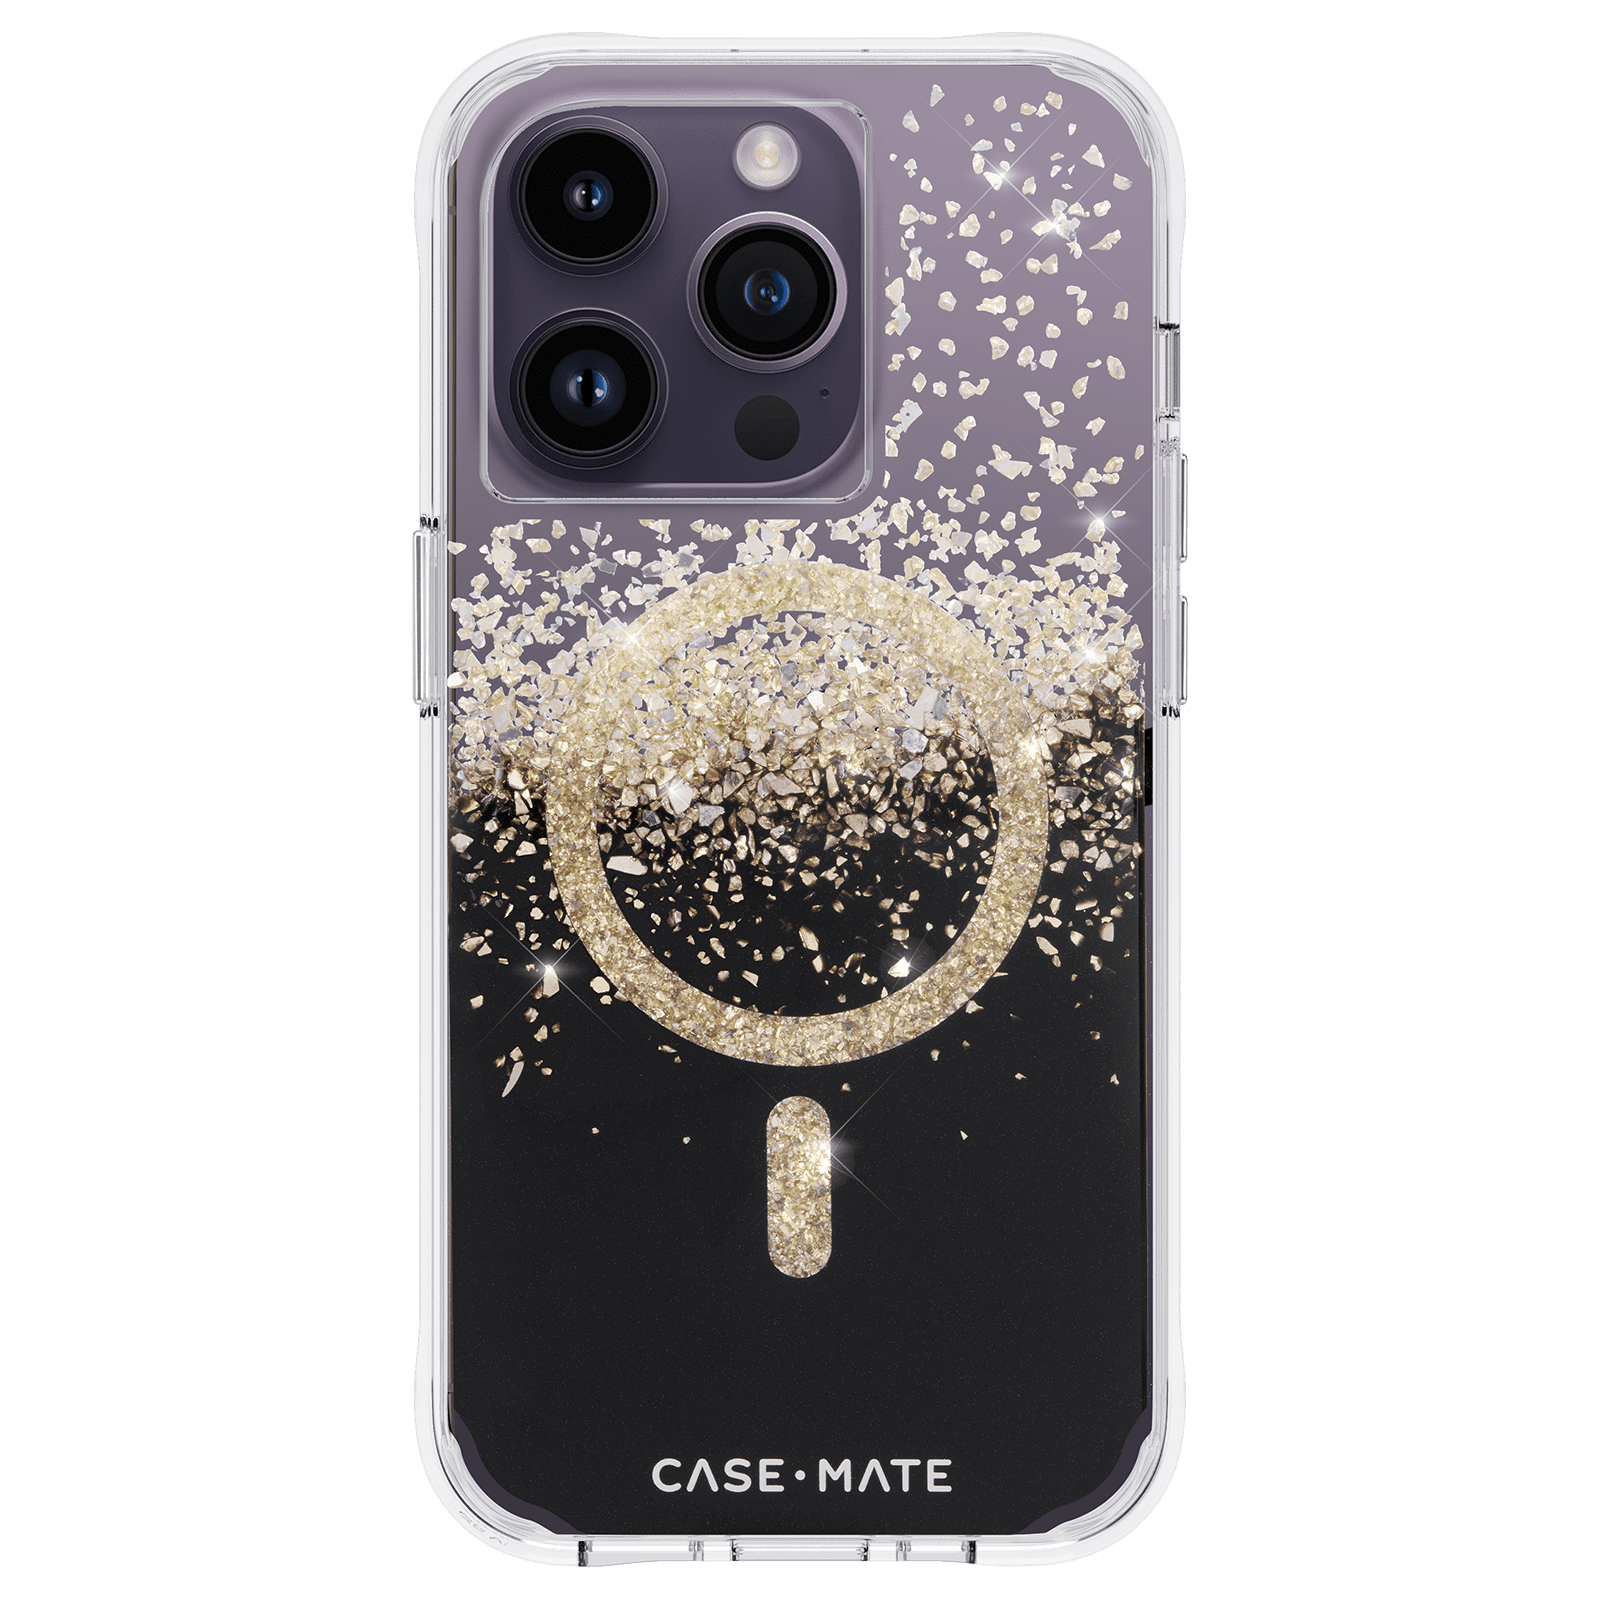 iphone 14 pro max casemate - Lemon8 Search